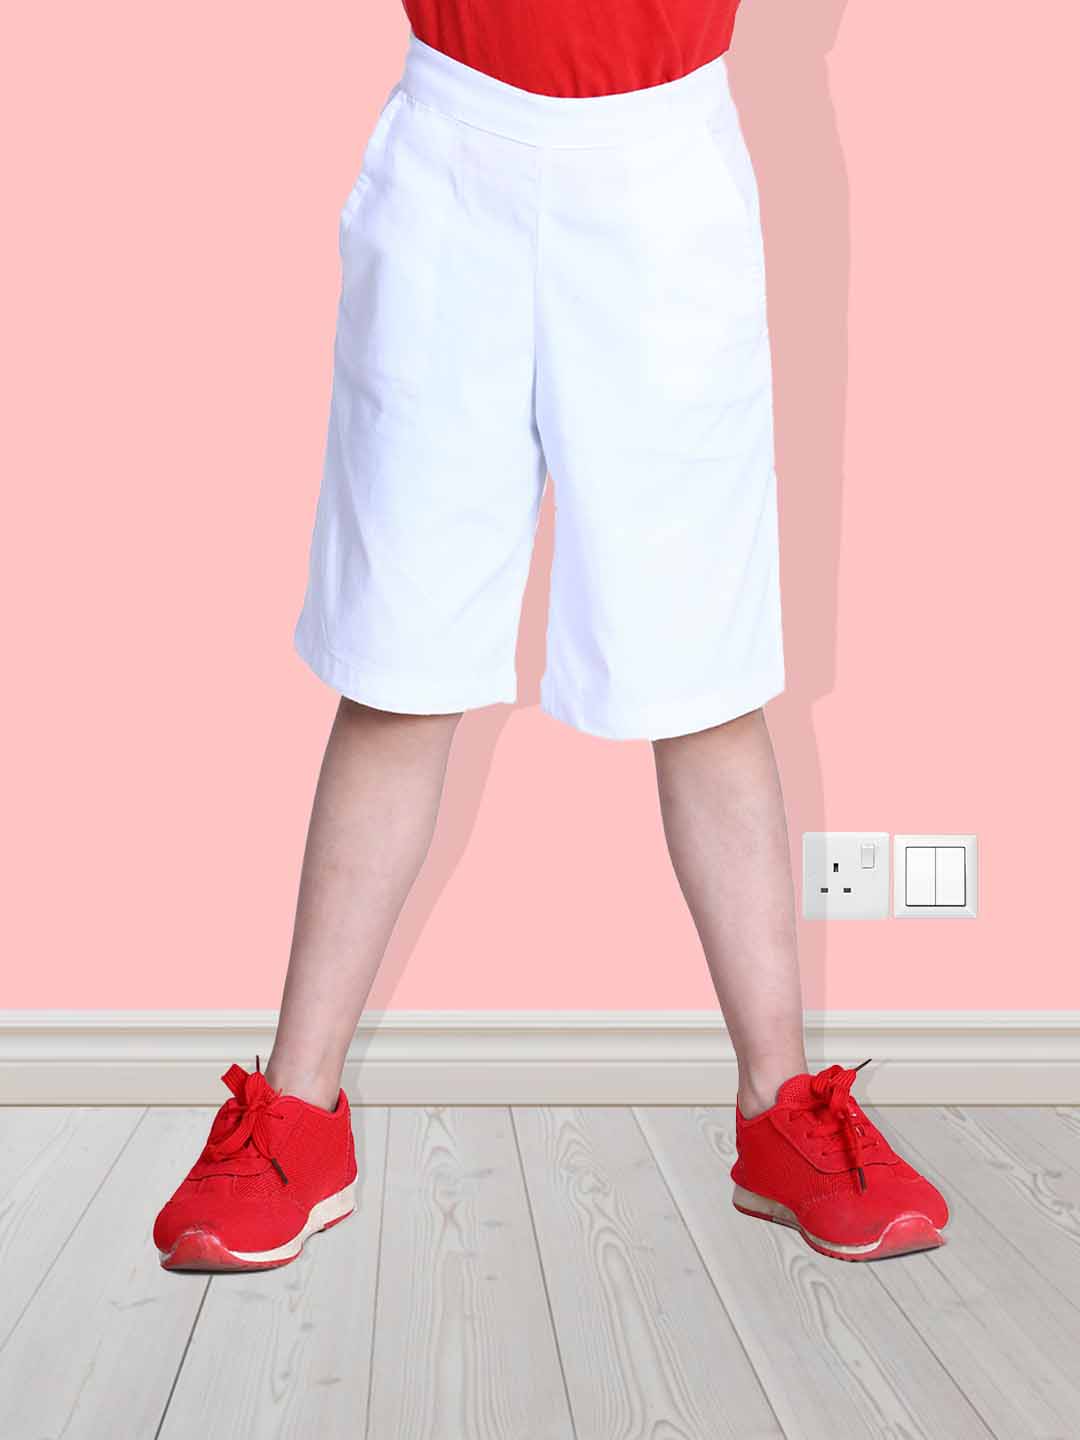 Cutiekins Short For Boys Casual Solid Lycra Blend  (White,)